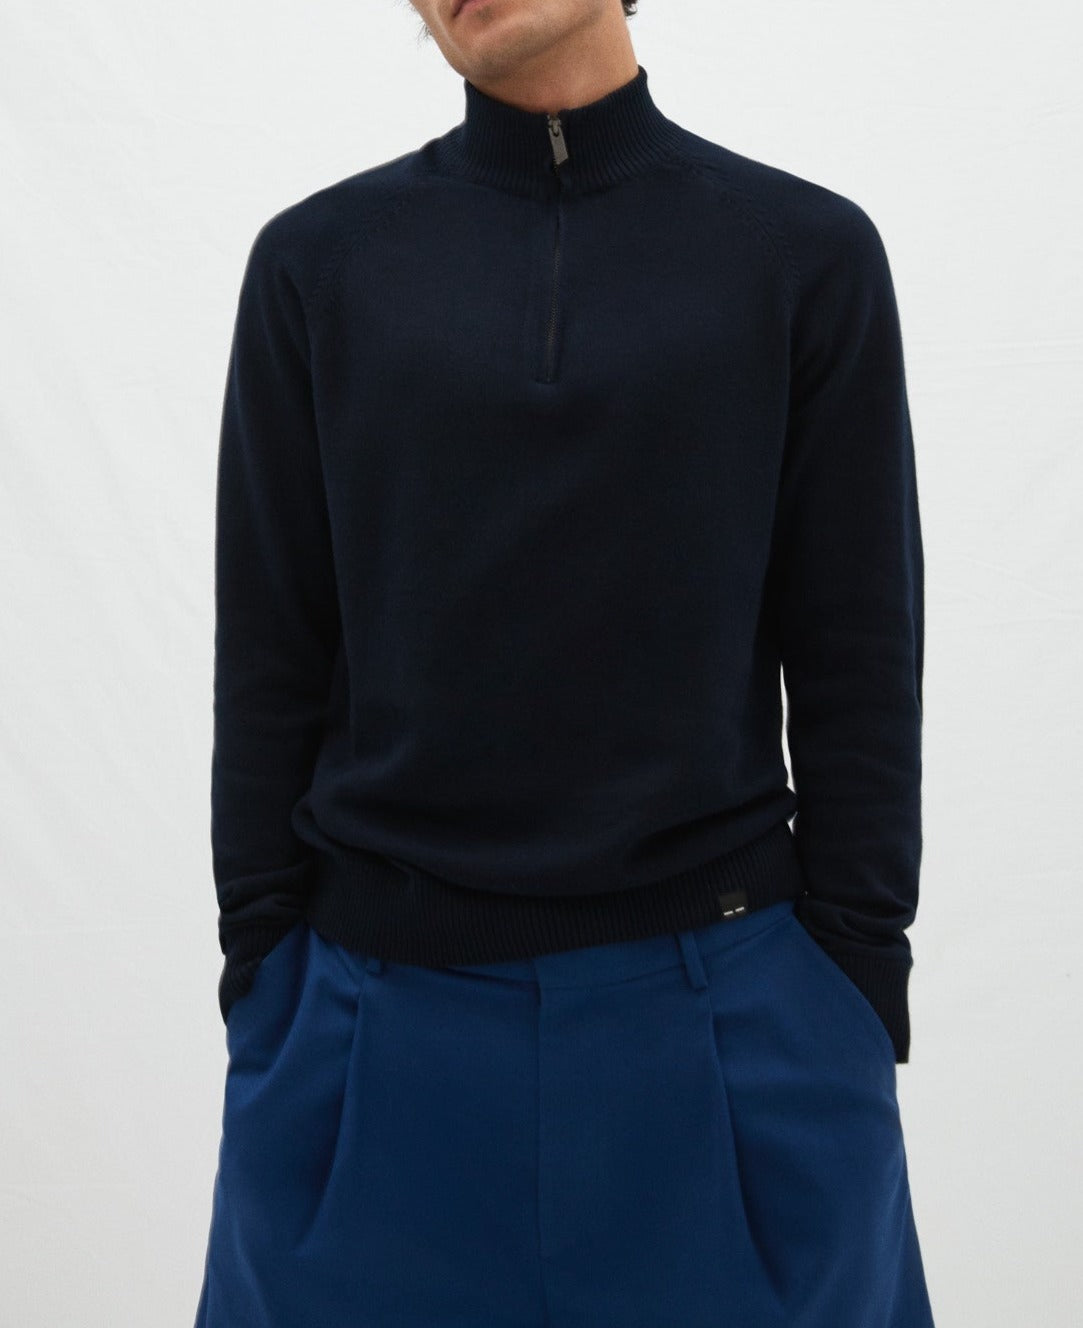 Men Jersey | Navy Blue Perkins Neck Sweater by Spanish designer Adolfo Dominguez